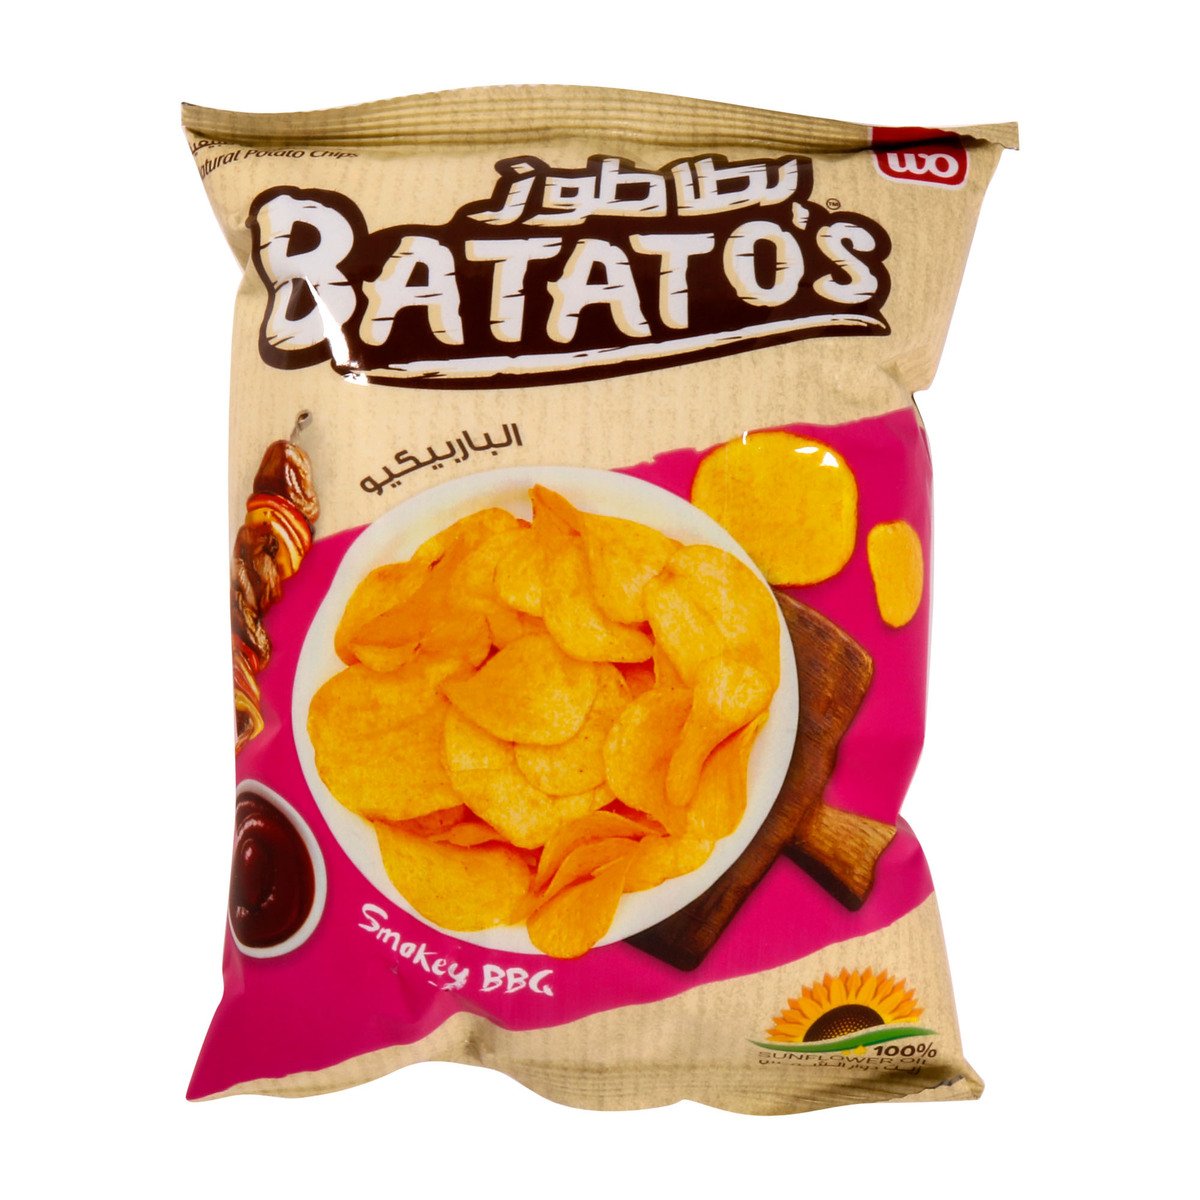 Batato Chips Smokey BBQ 15g x 20 Pieces